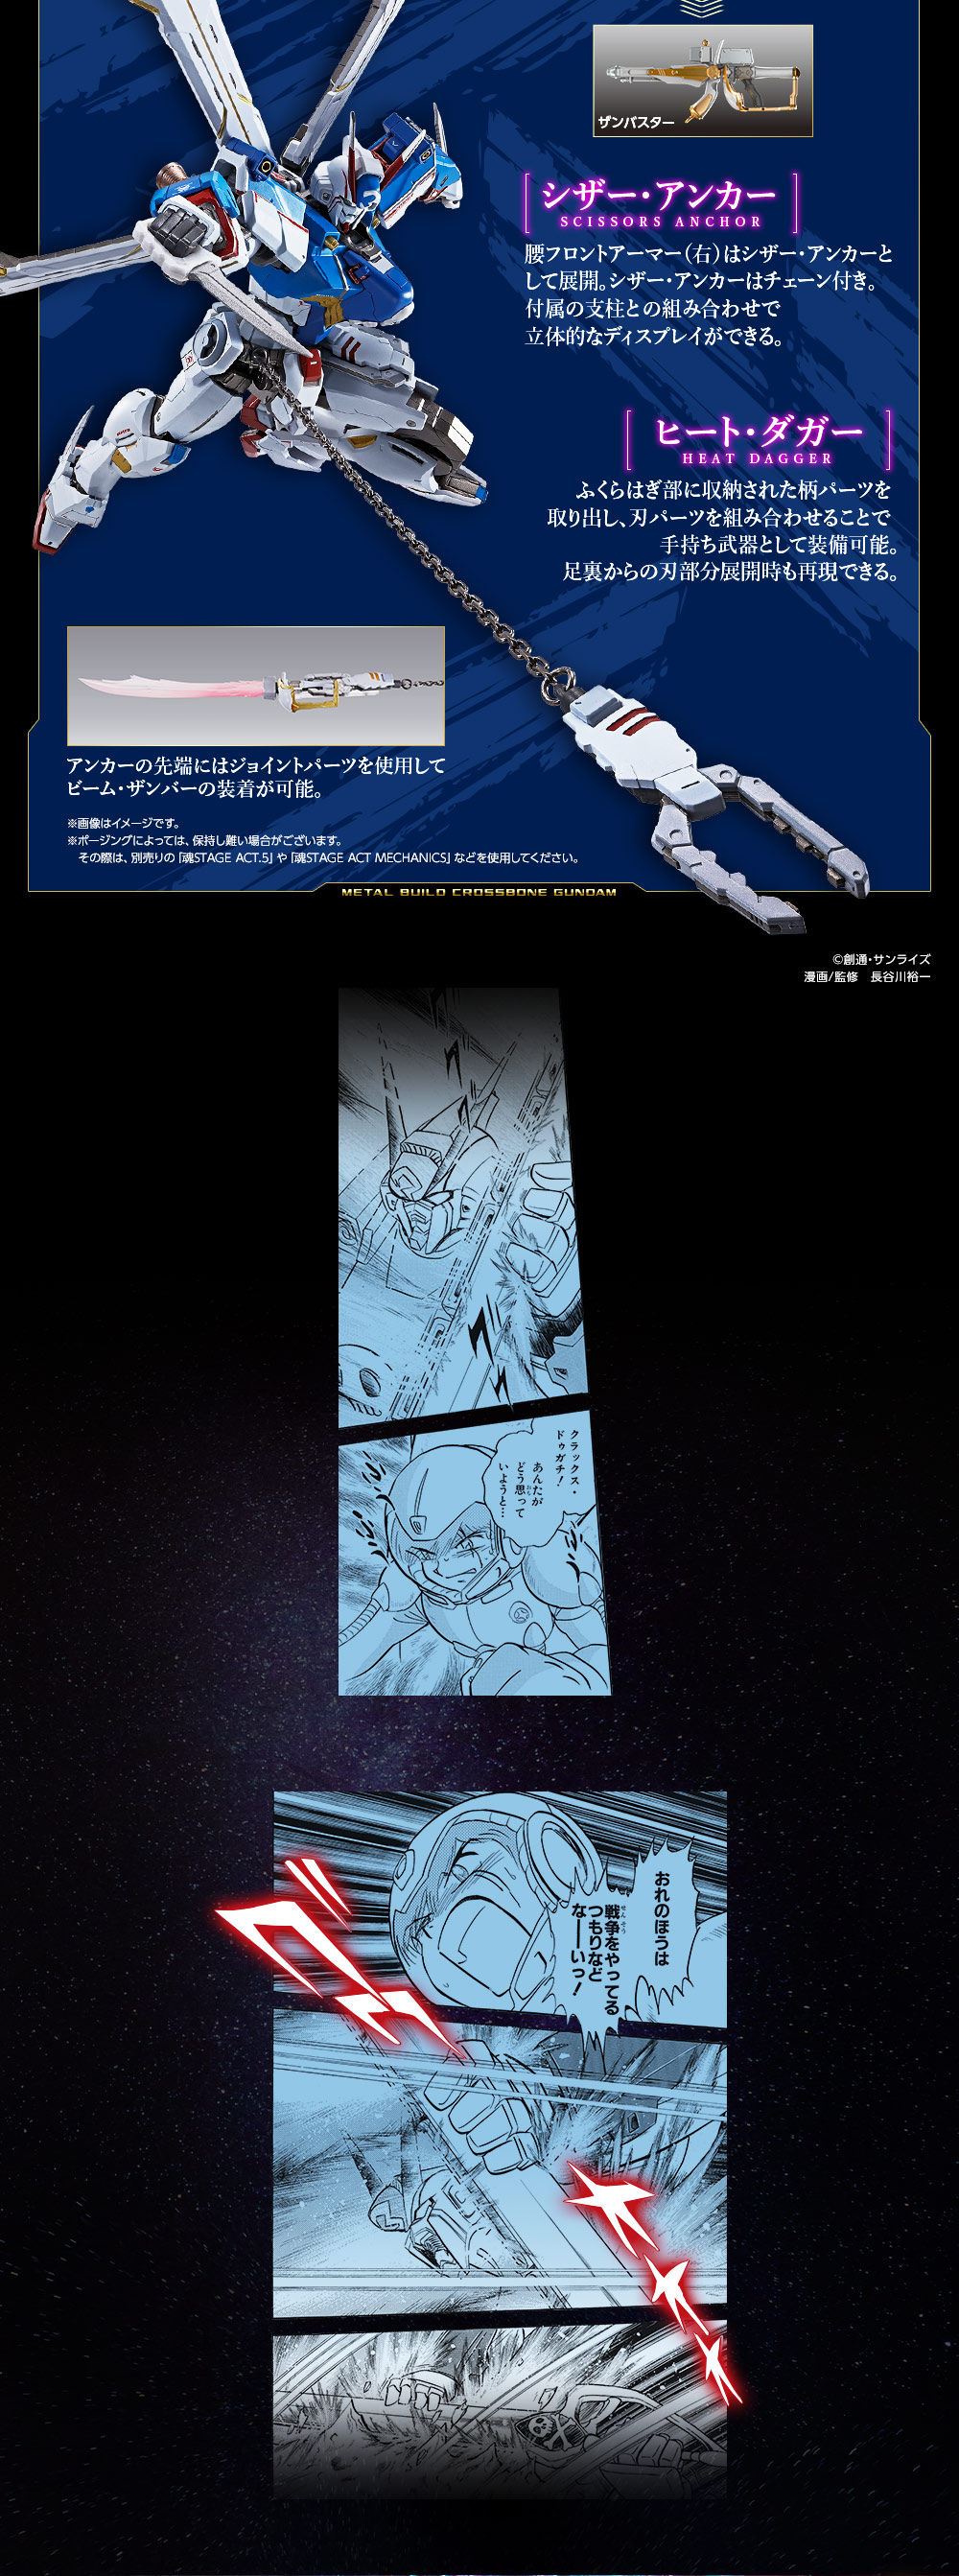 Metal Build XM-X3(F97) Crossbone Gundam X-3 + EMA-06 Elegolea